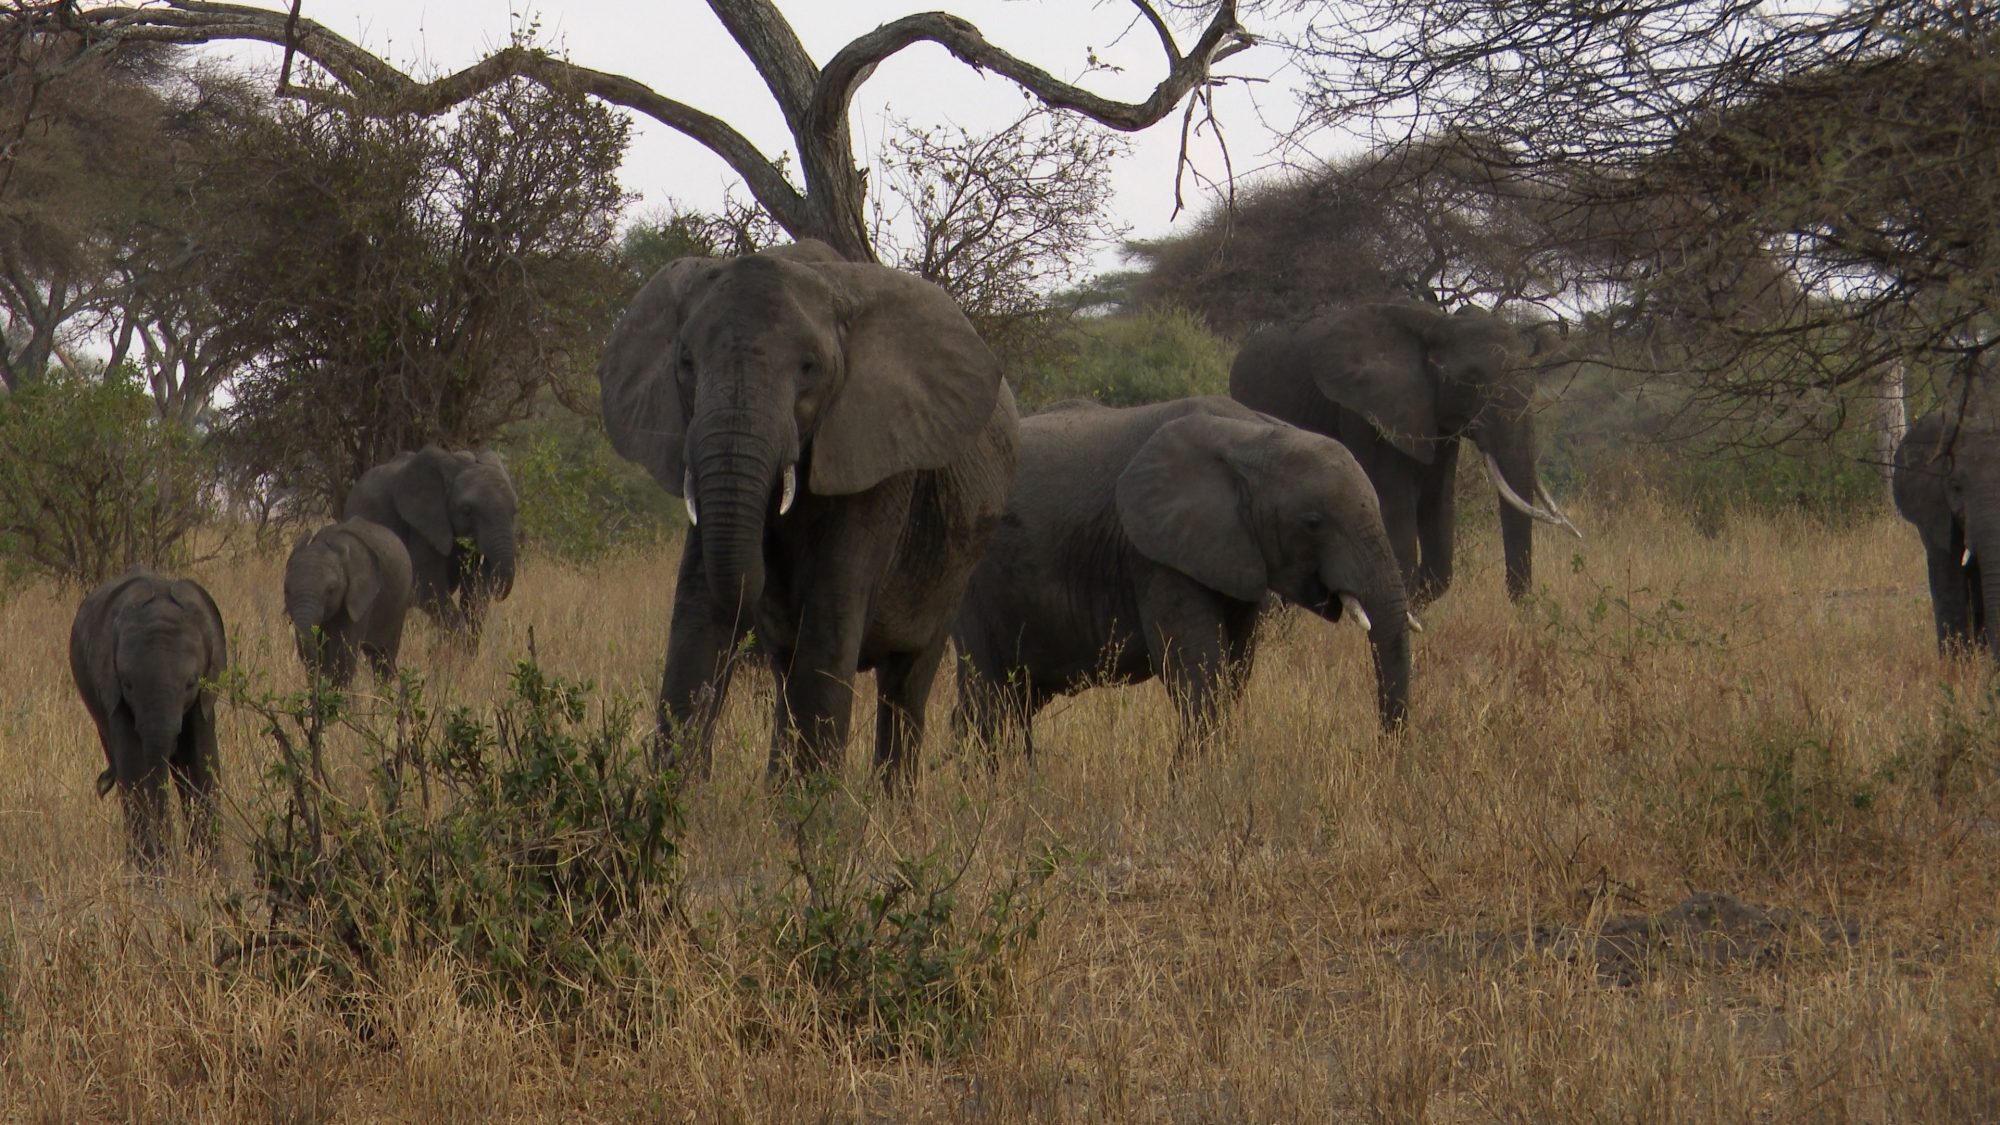 Elephants on the move – Tanzania, 2019